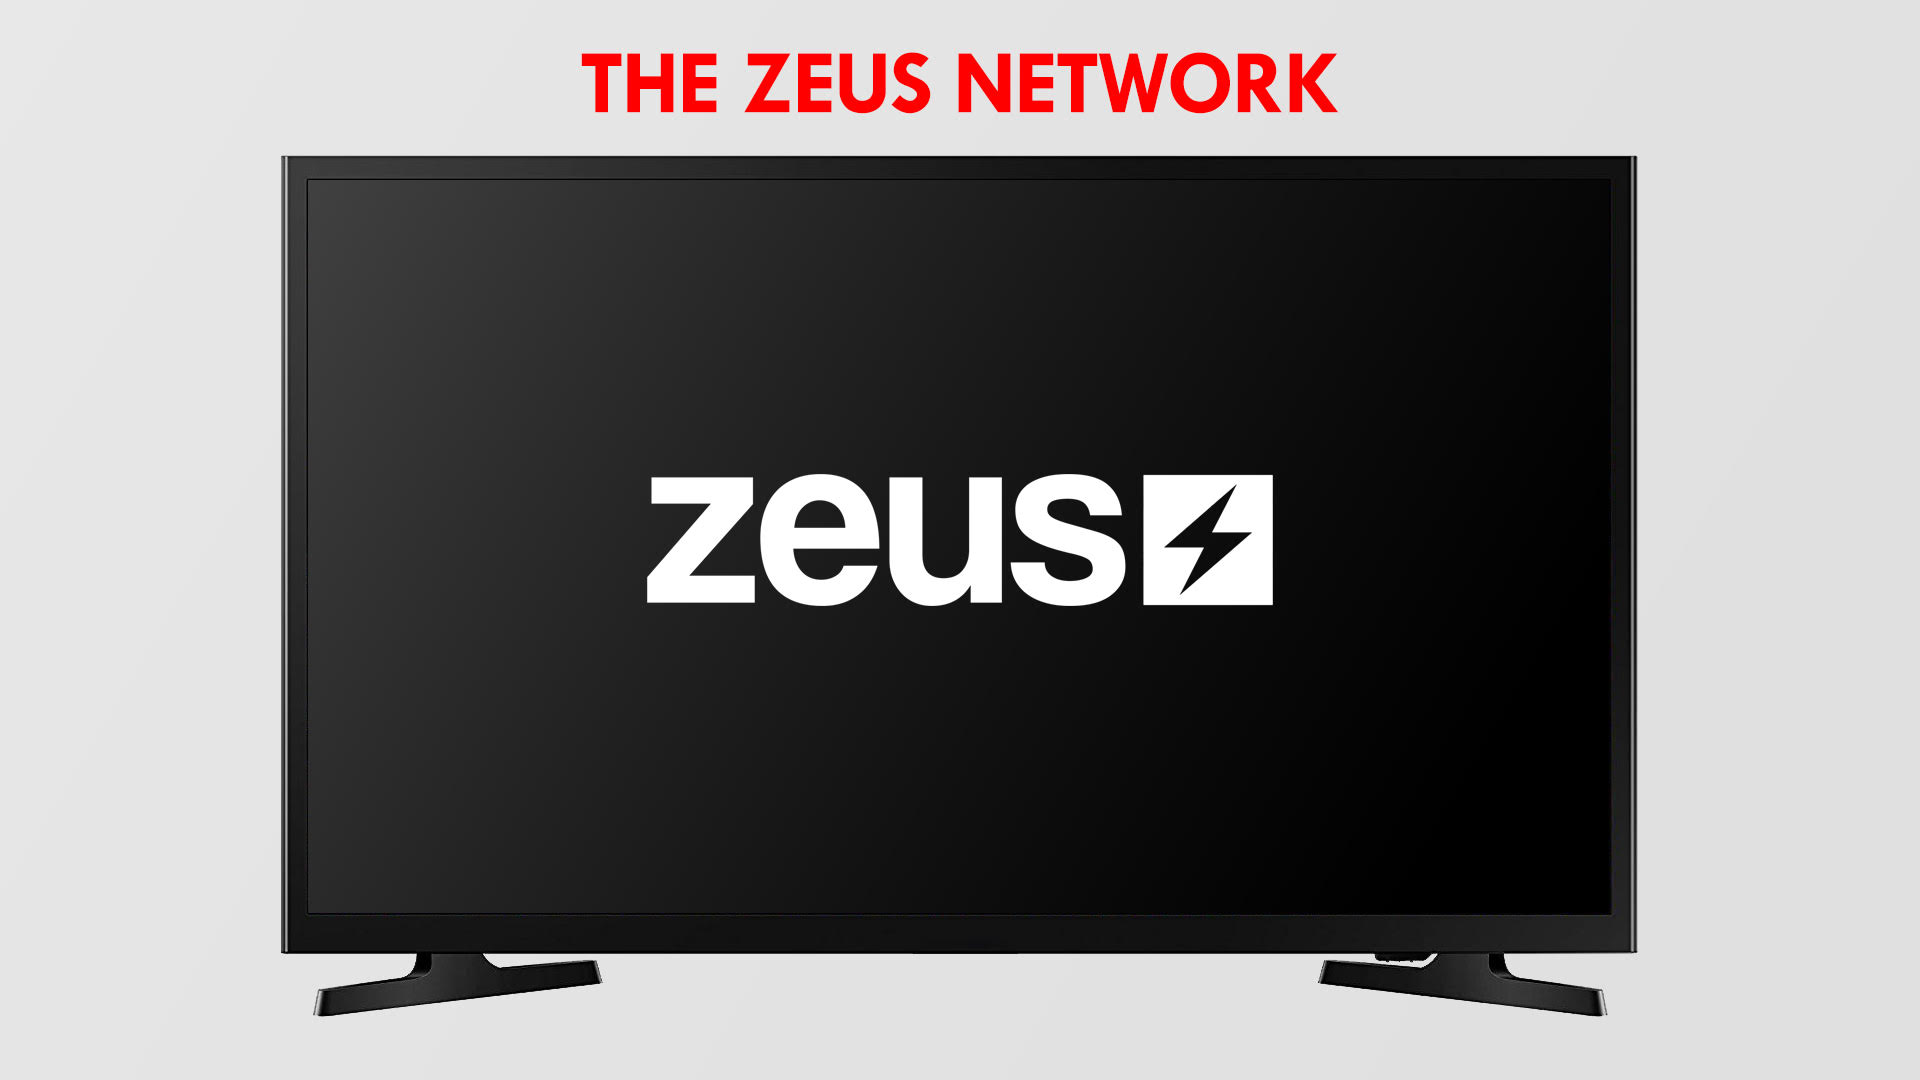 How To Download Zeus Network On TV